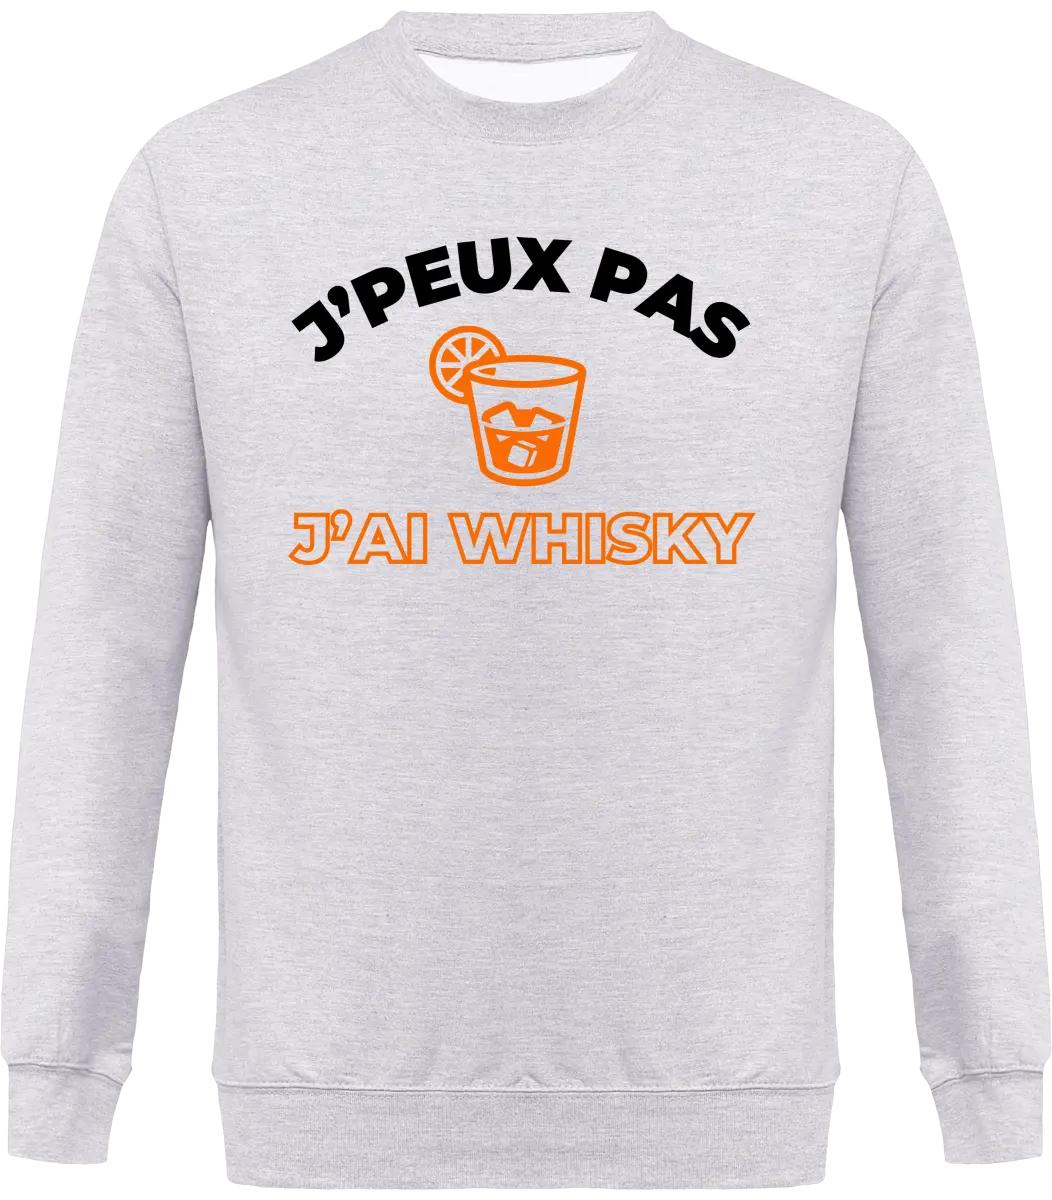 Sweat Whisky "J'peux pas j'ai whisky" | Mixte - French Humour